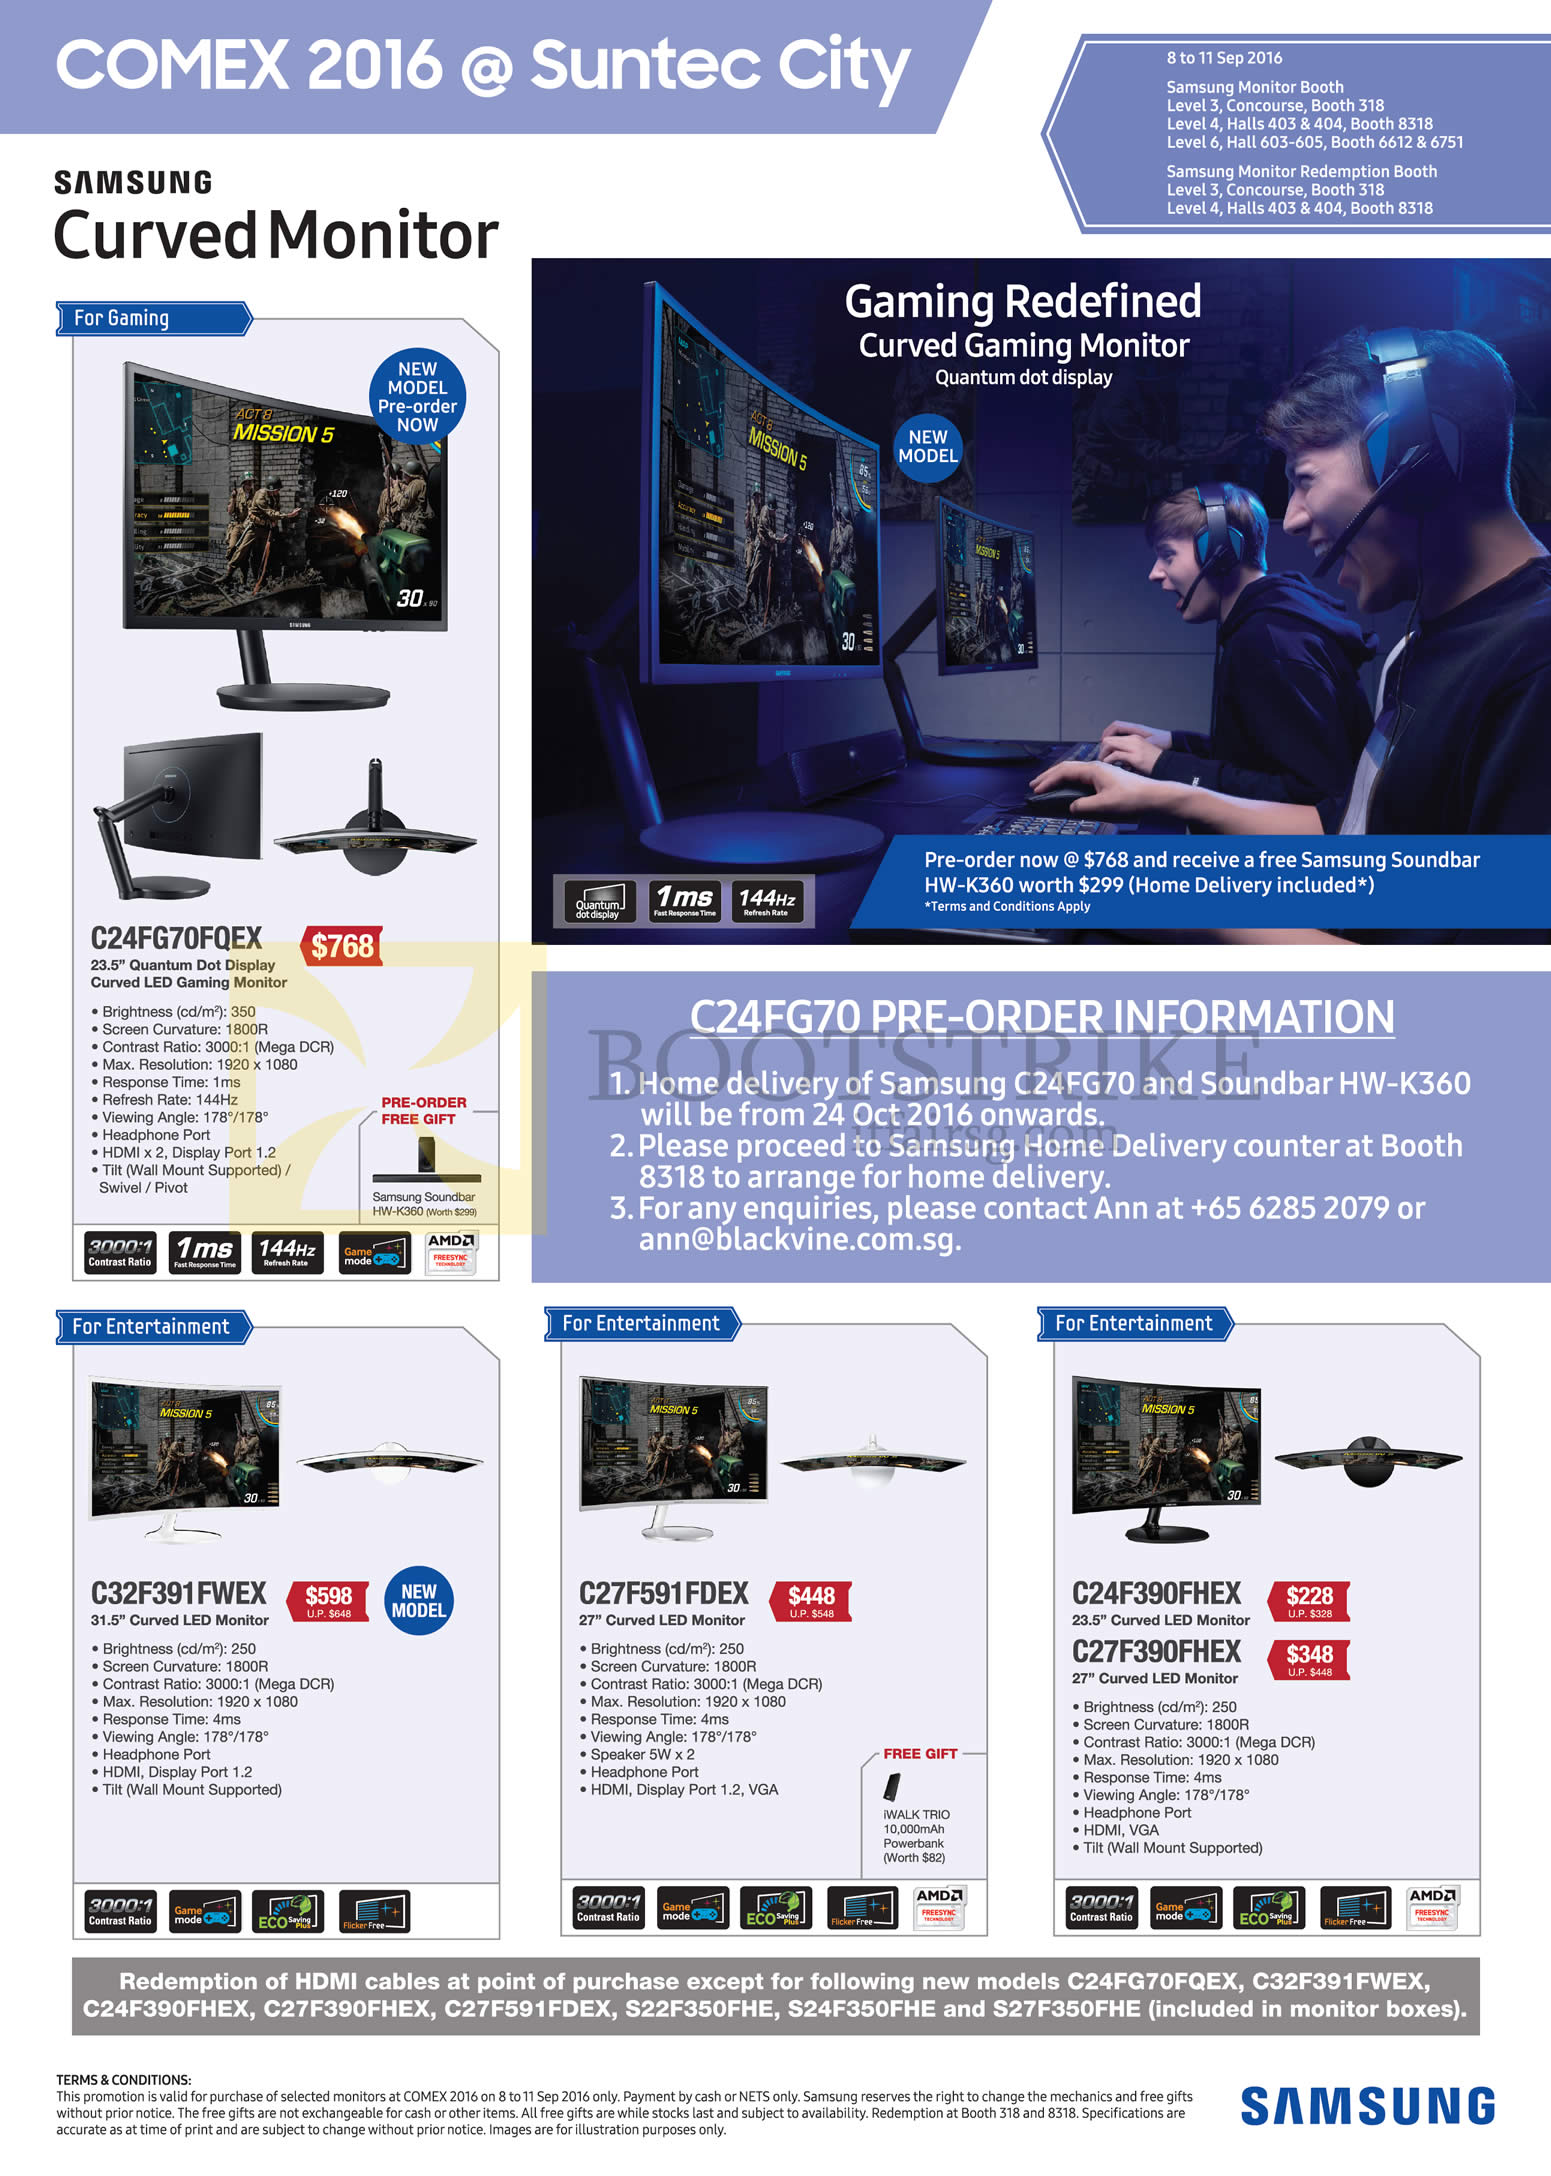 COMEX 2016 price list image brochure of Samsung Monitors LED C24FG70FQEX, C32F391FWEX, C27F591FDEX, C24F390FHEX, C27F390FHEX